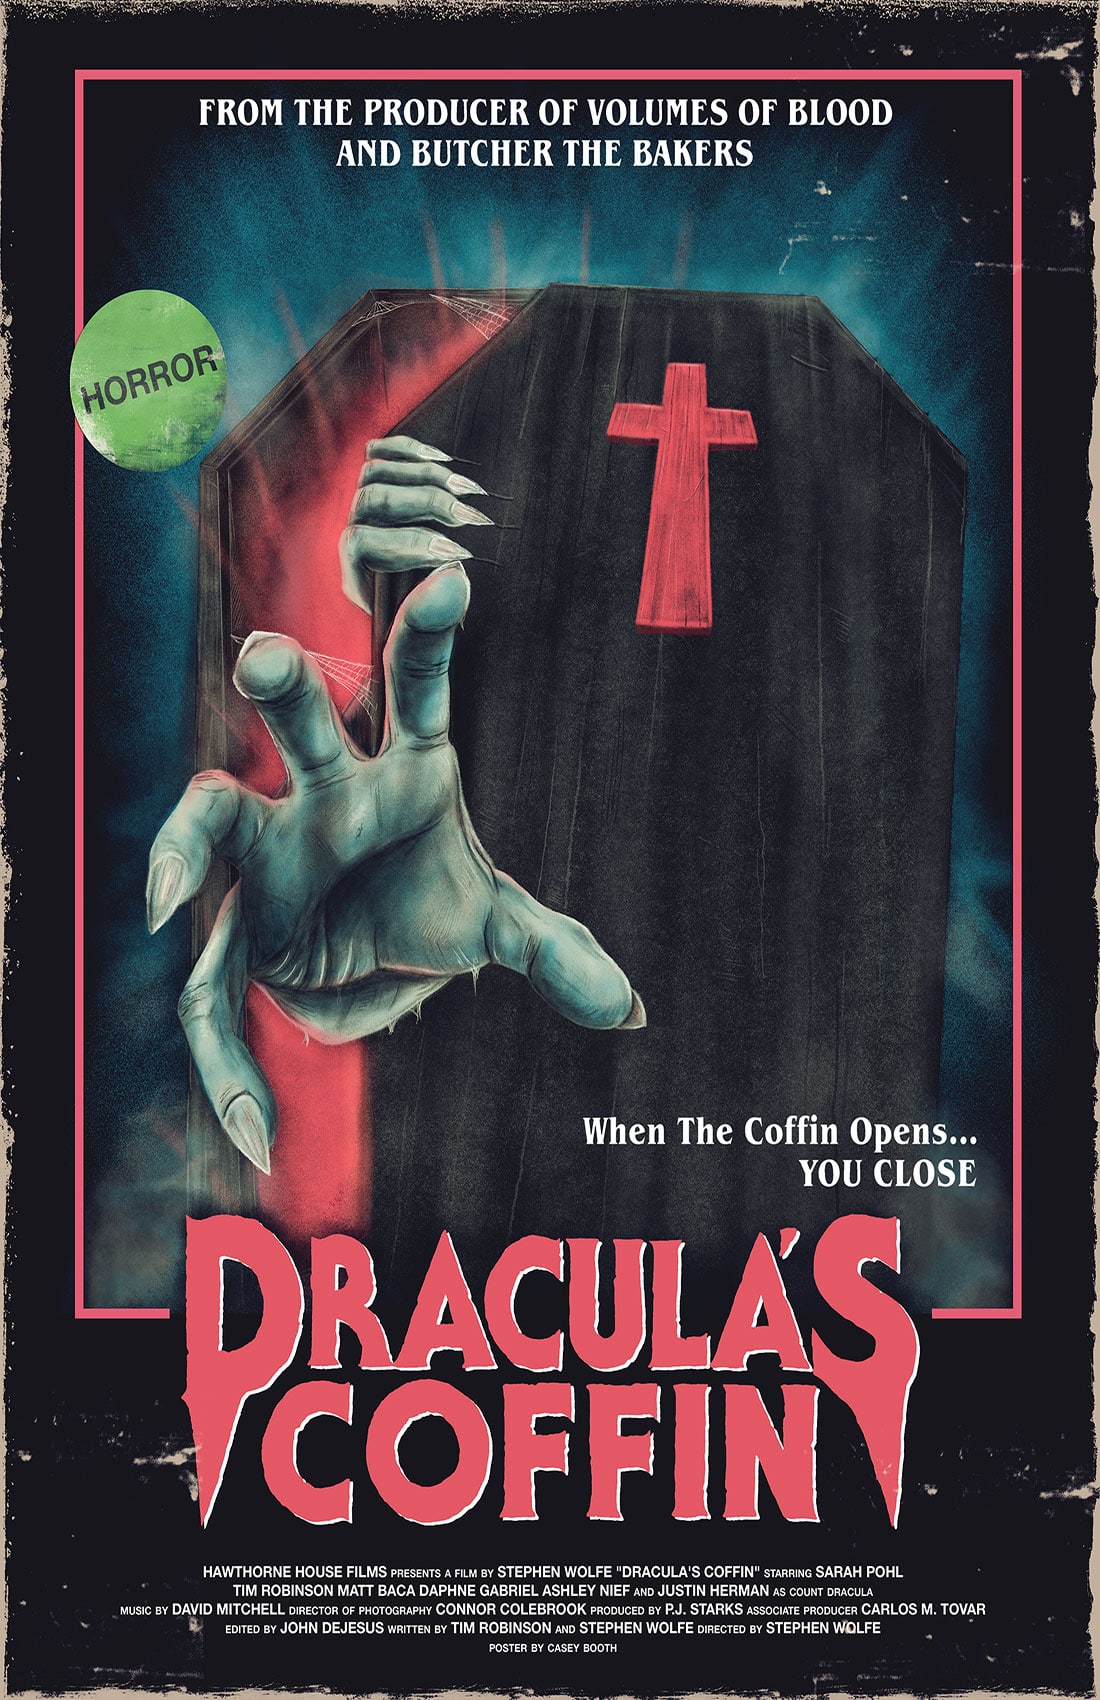 Draculas-Coffin-Poster-11x17